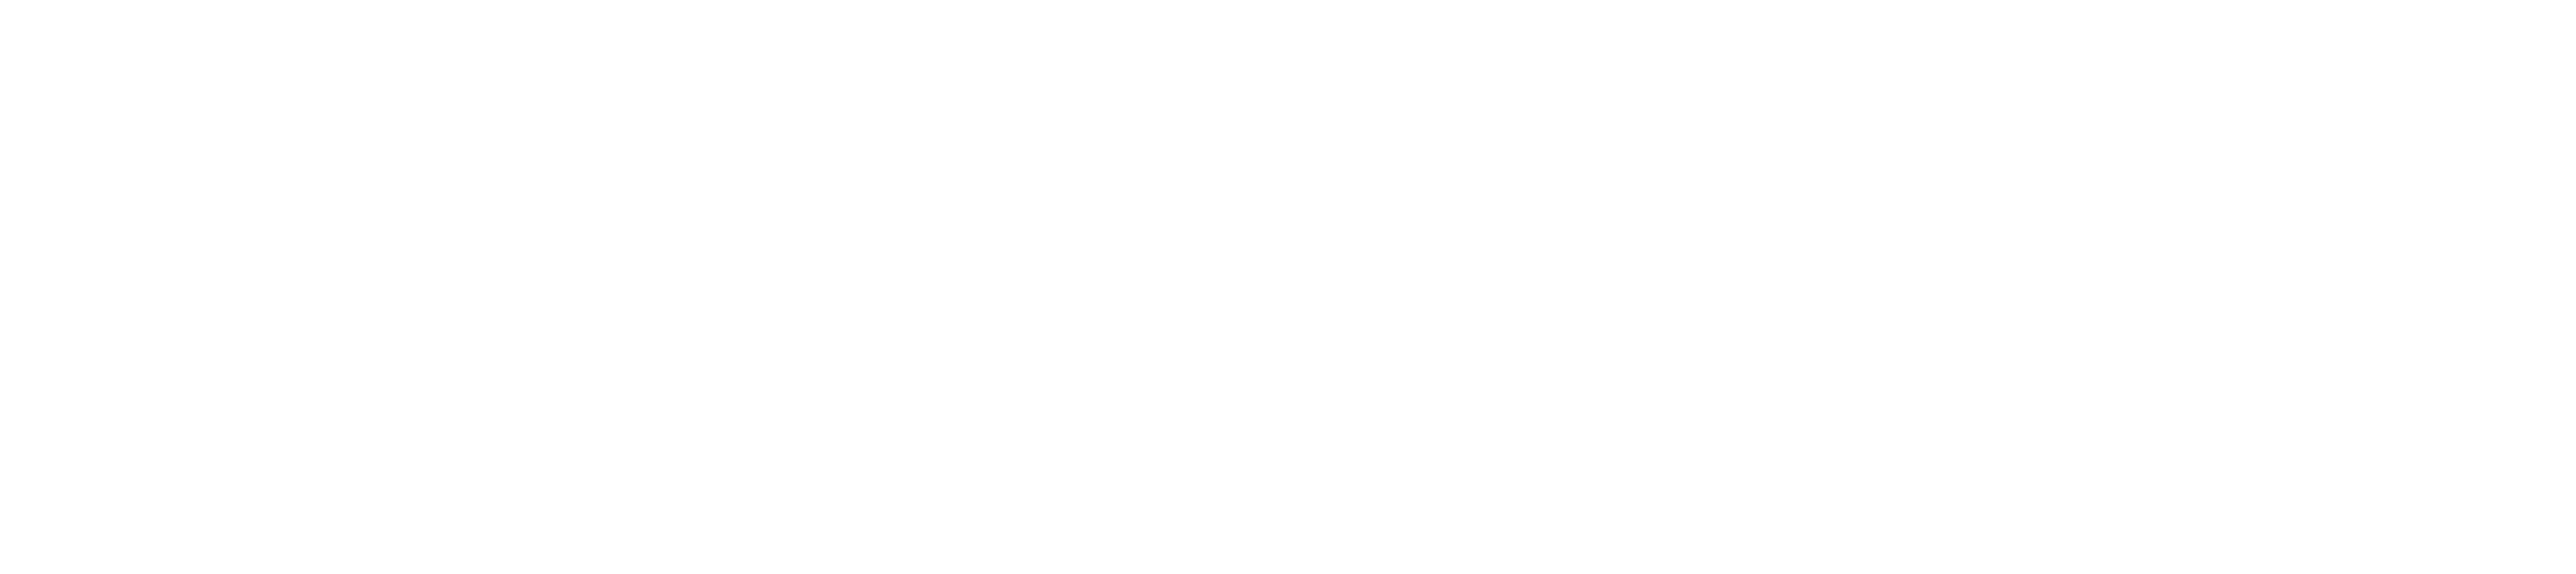 Glow Natural Wellness Logo White